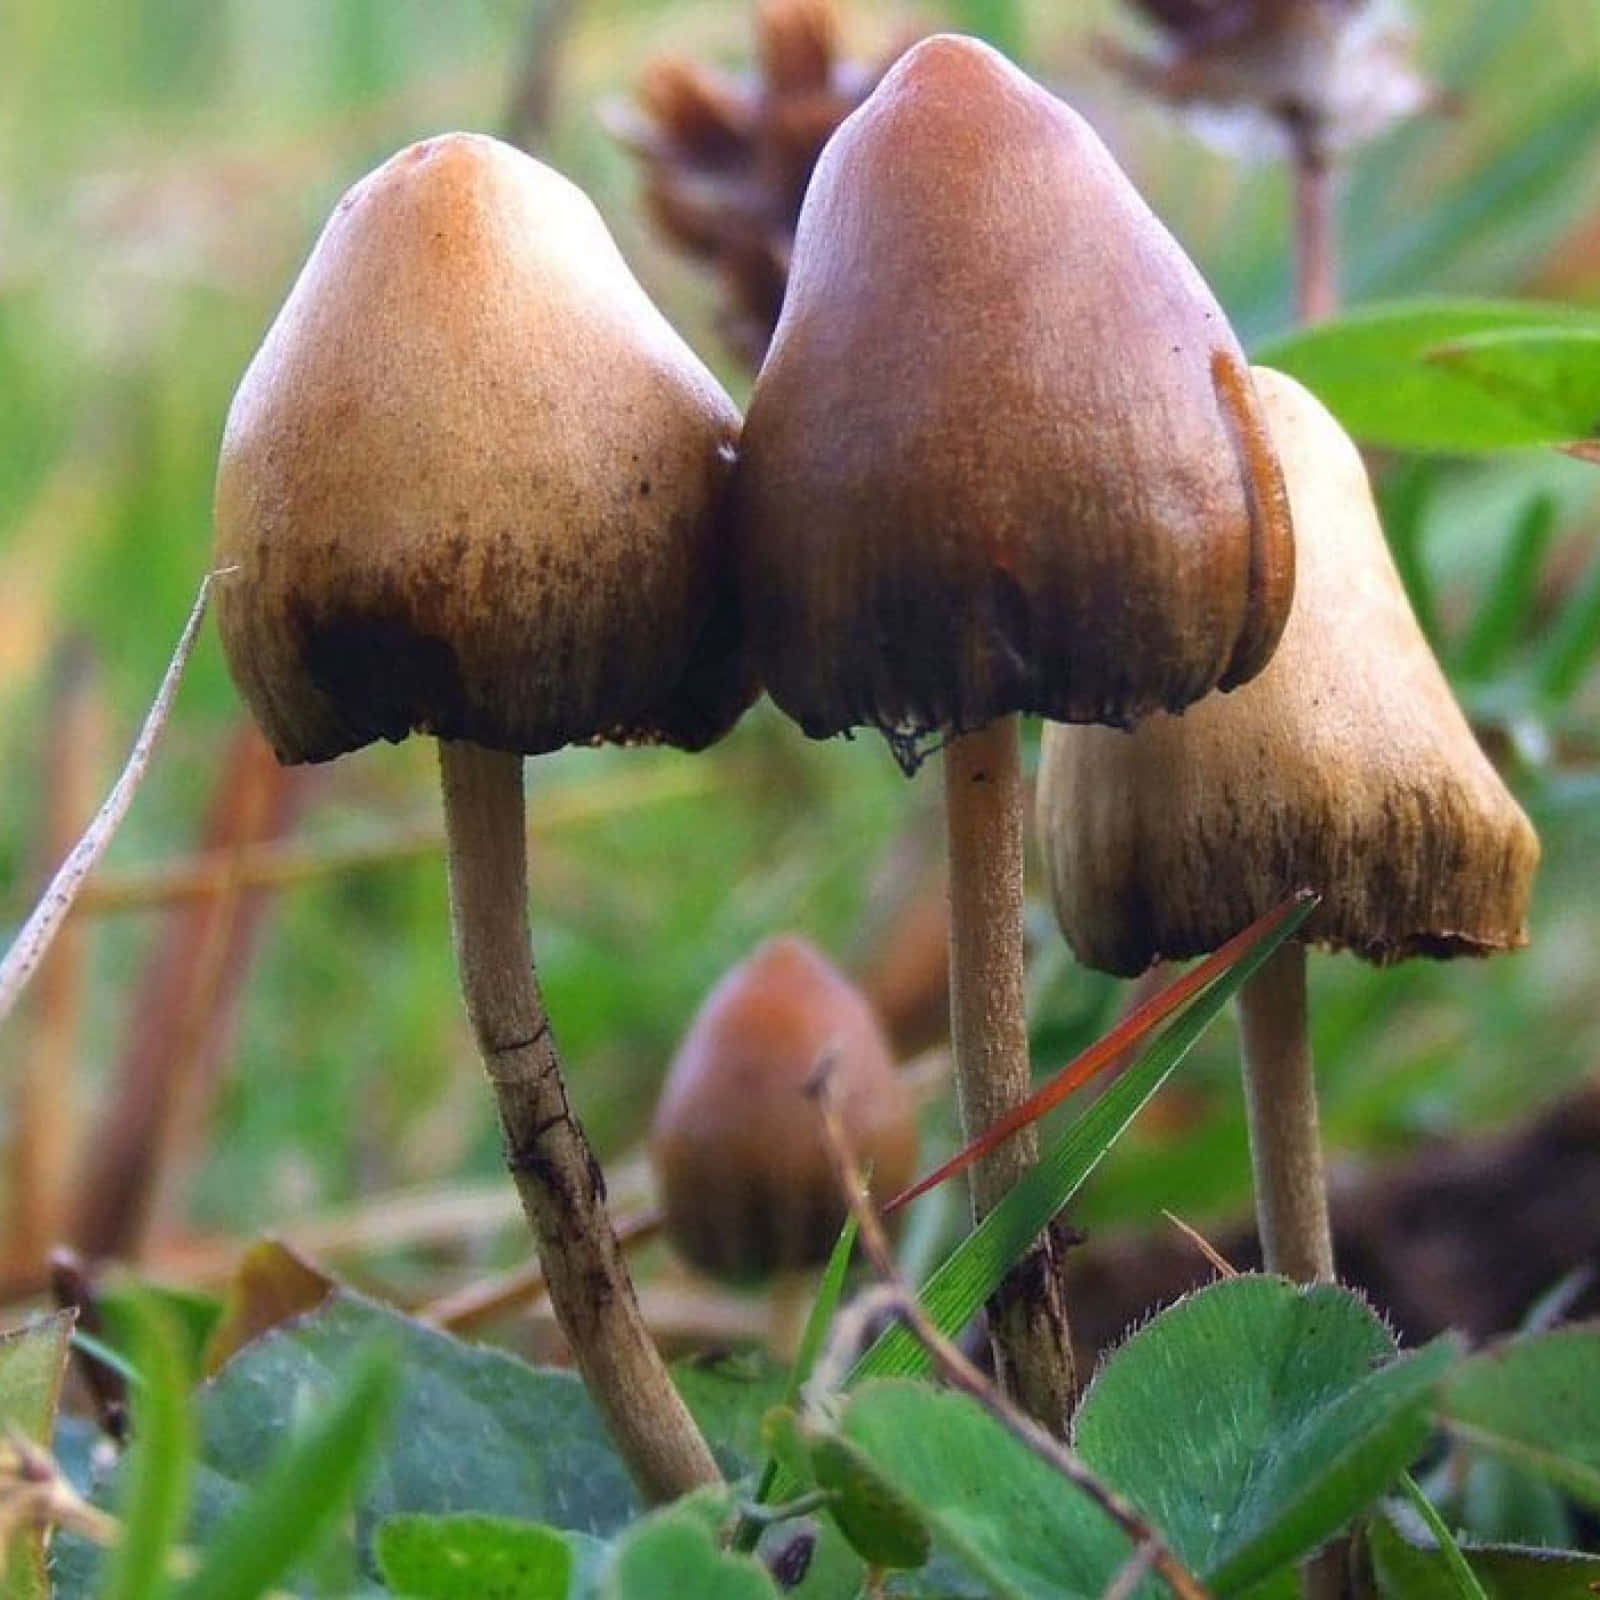 Three Mushrooms Are Sitting On Top Of Grass